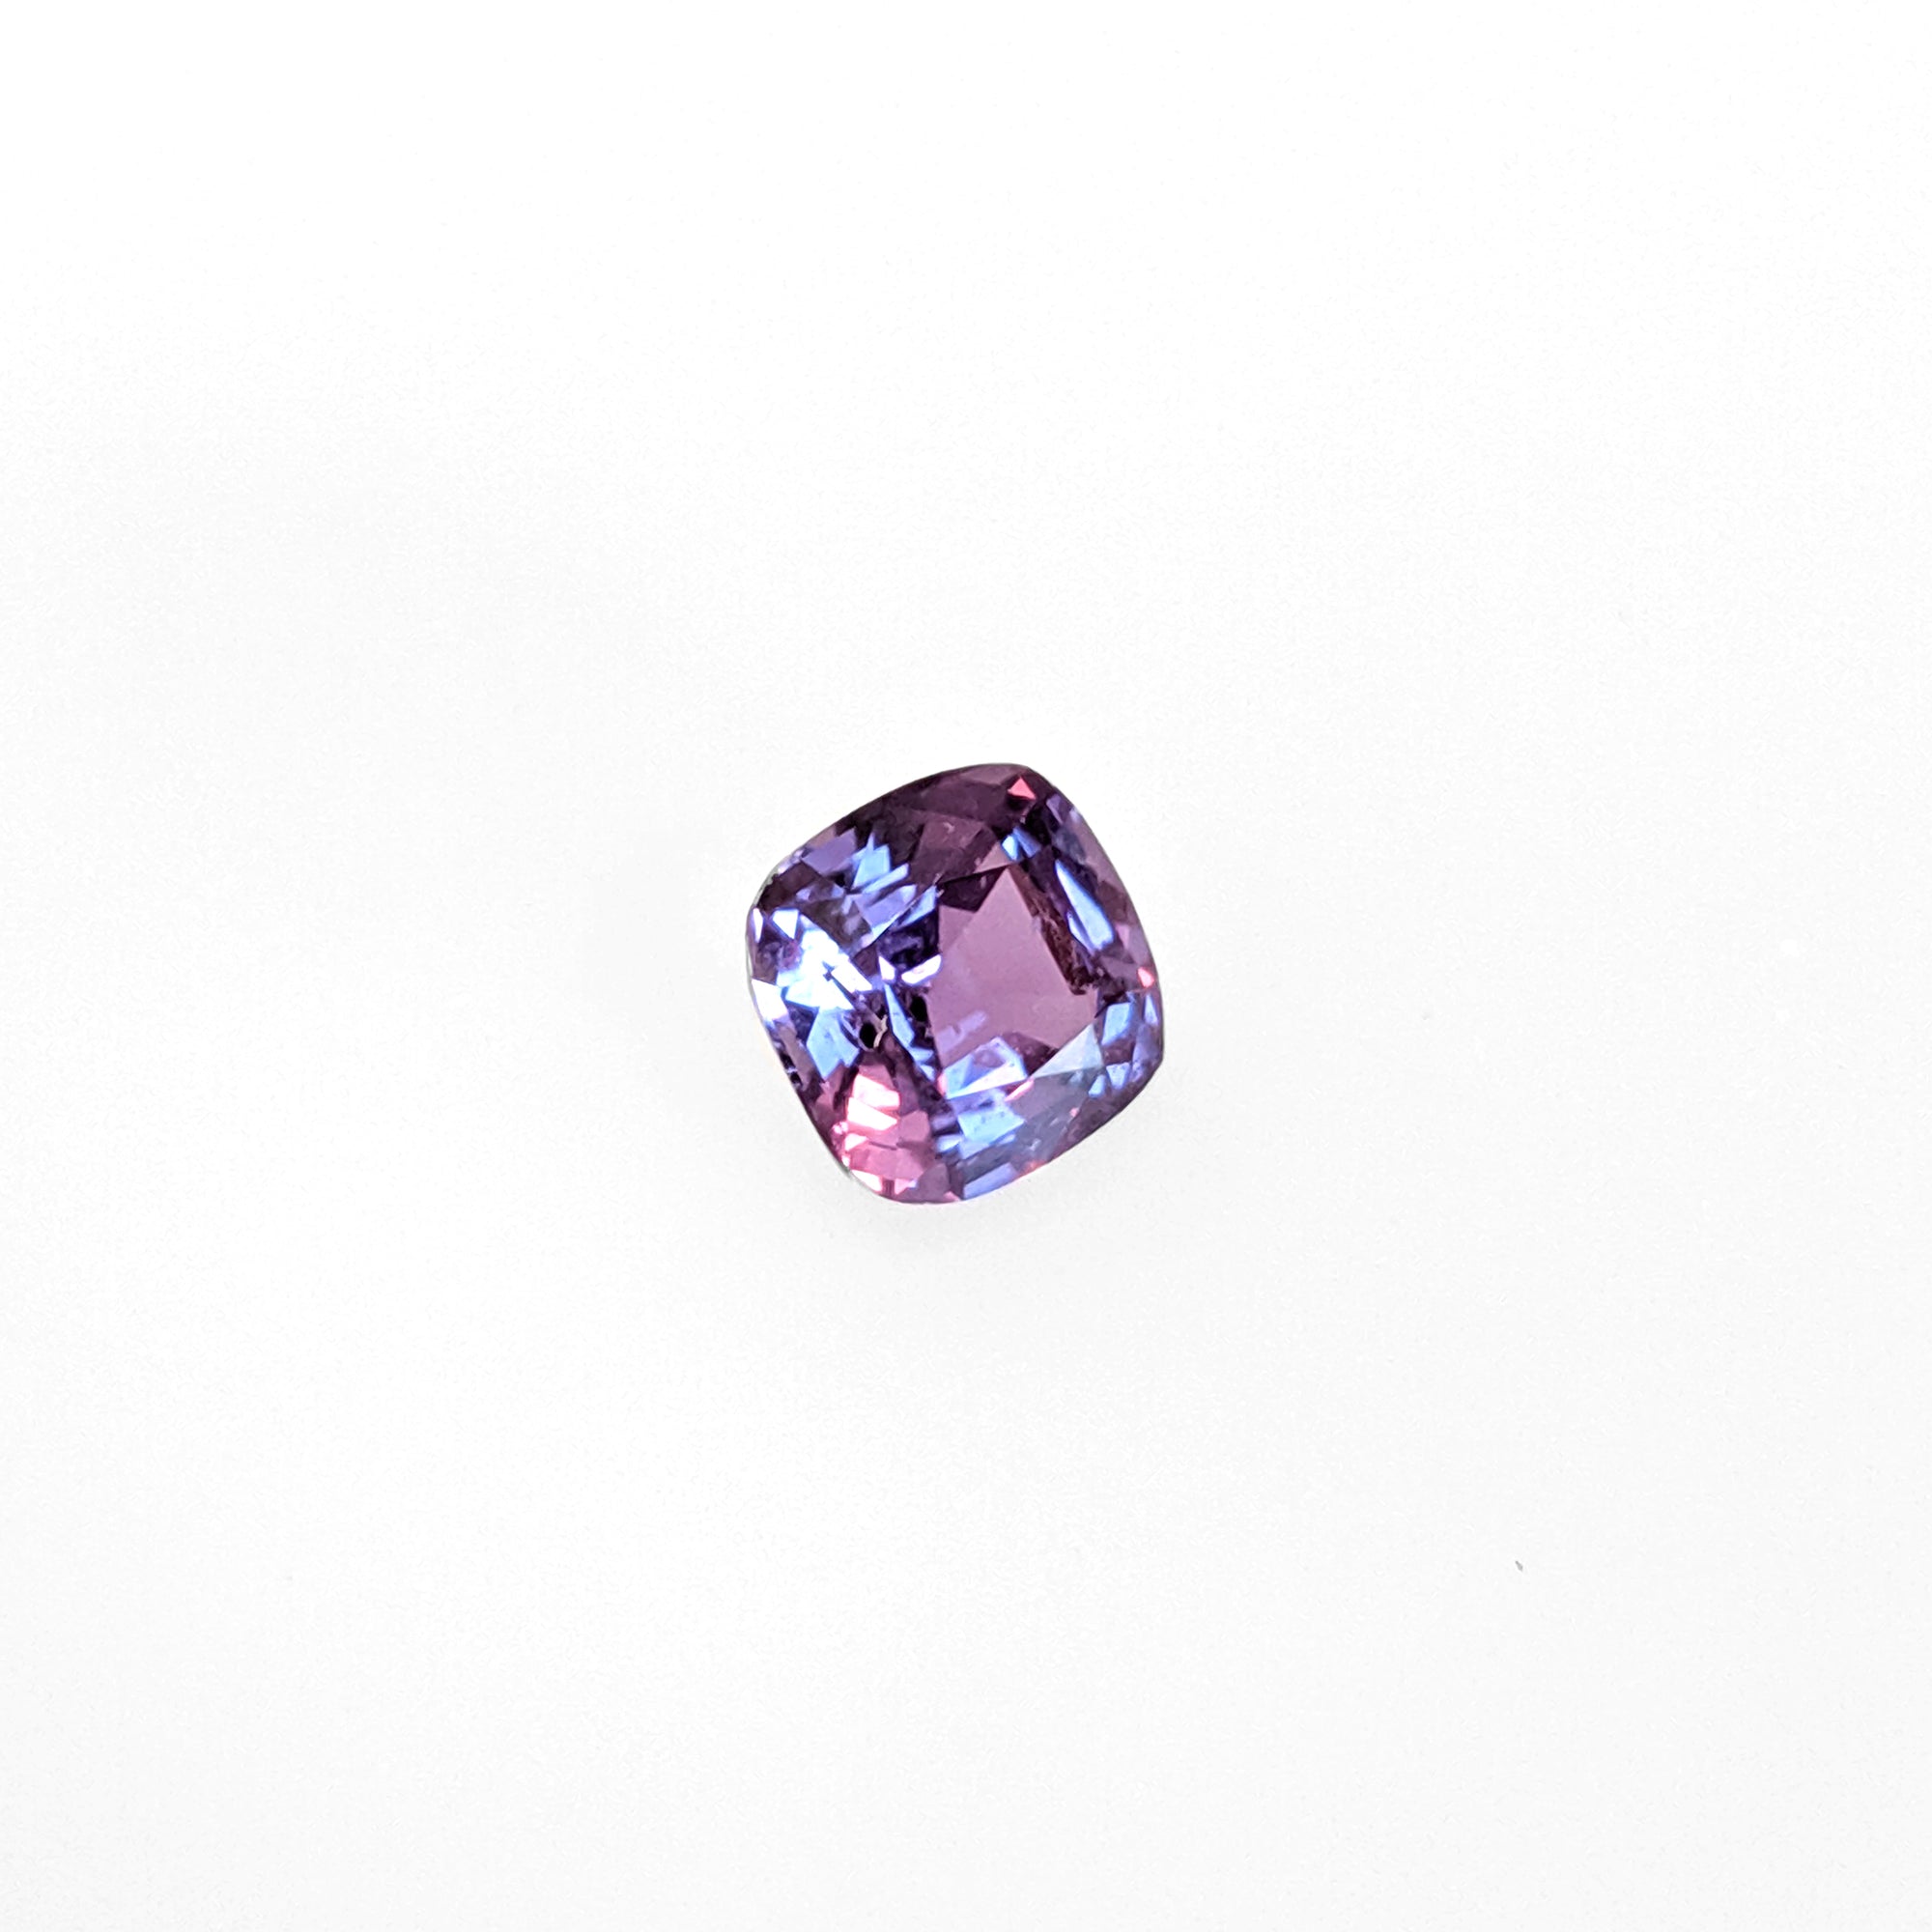 1.66 Carat Color Change Purple to Pink Sapphire